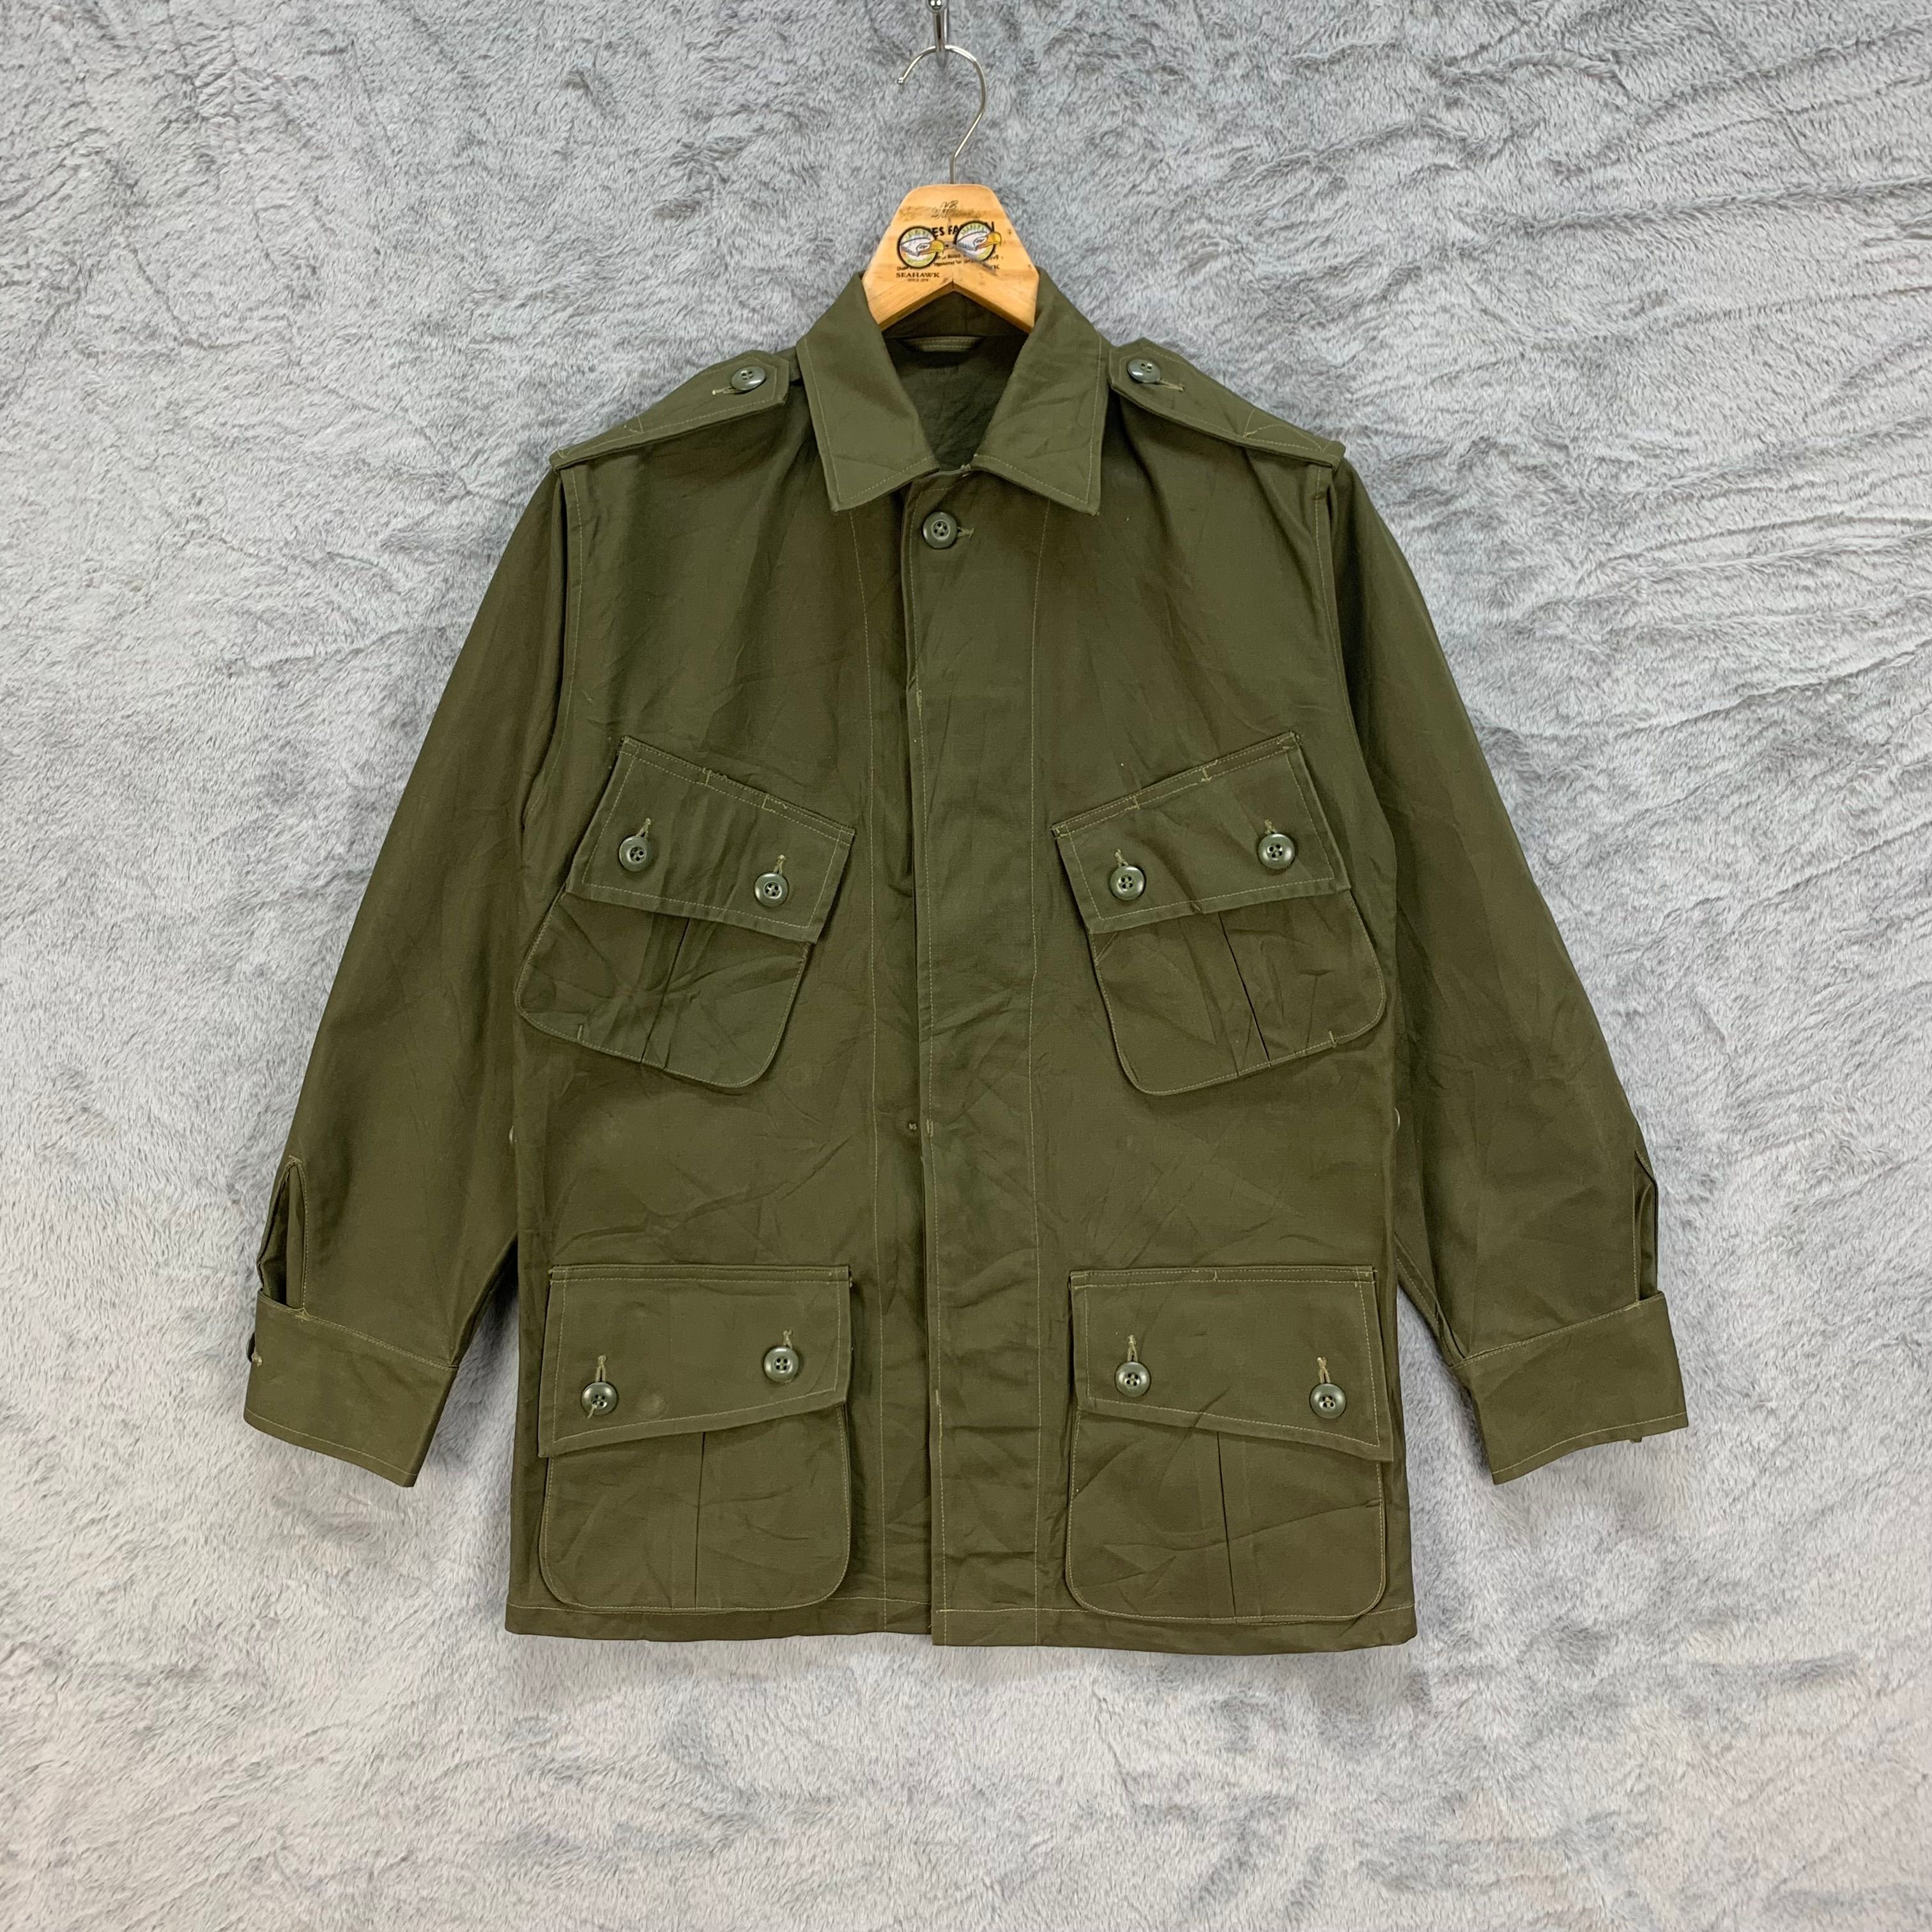 Vintage - Army Uniform Military Field Jacket / Chore Jacket #4400-152 - 1